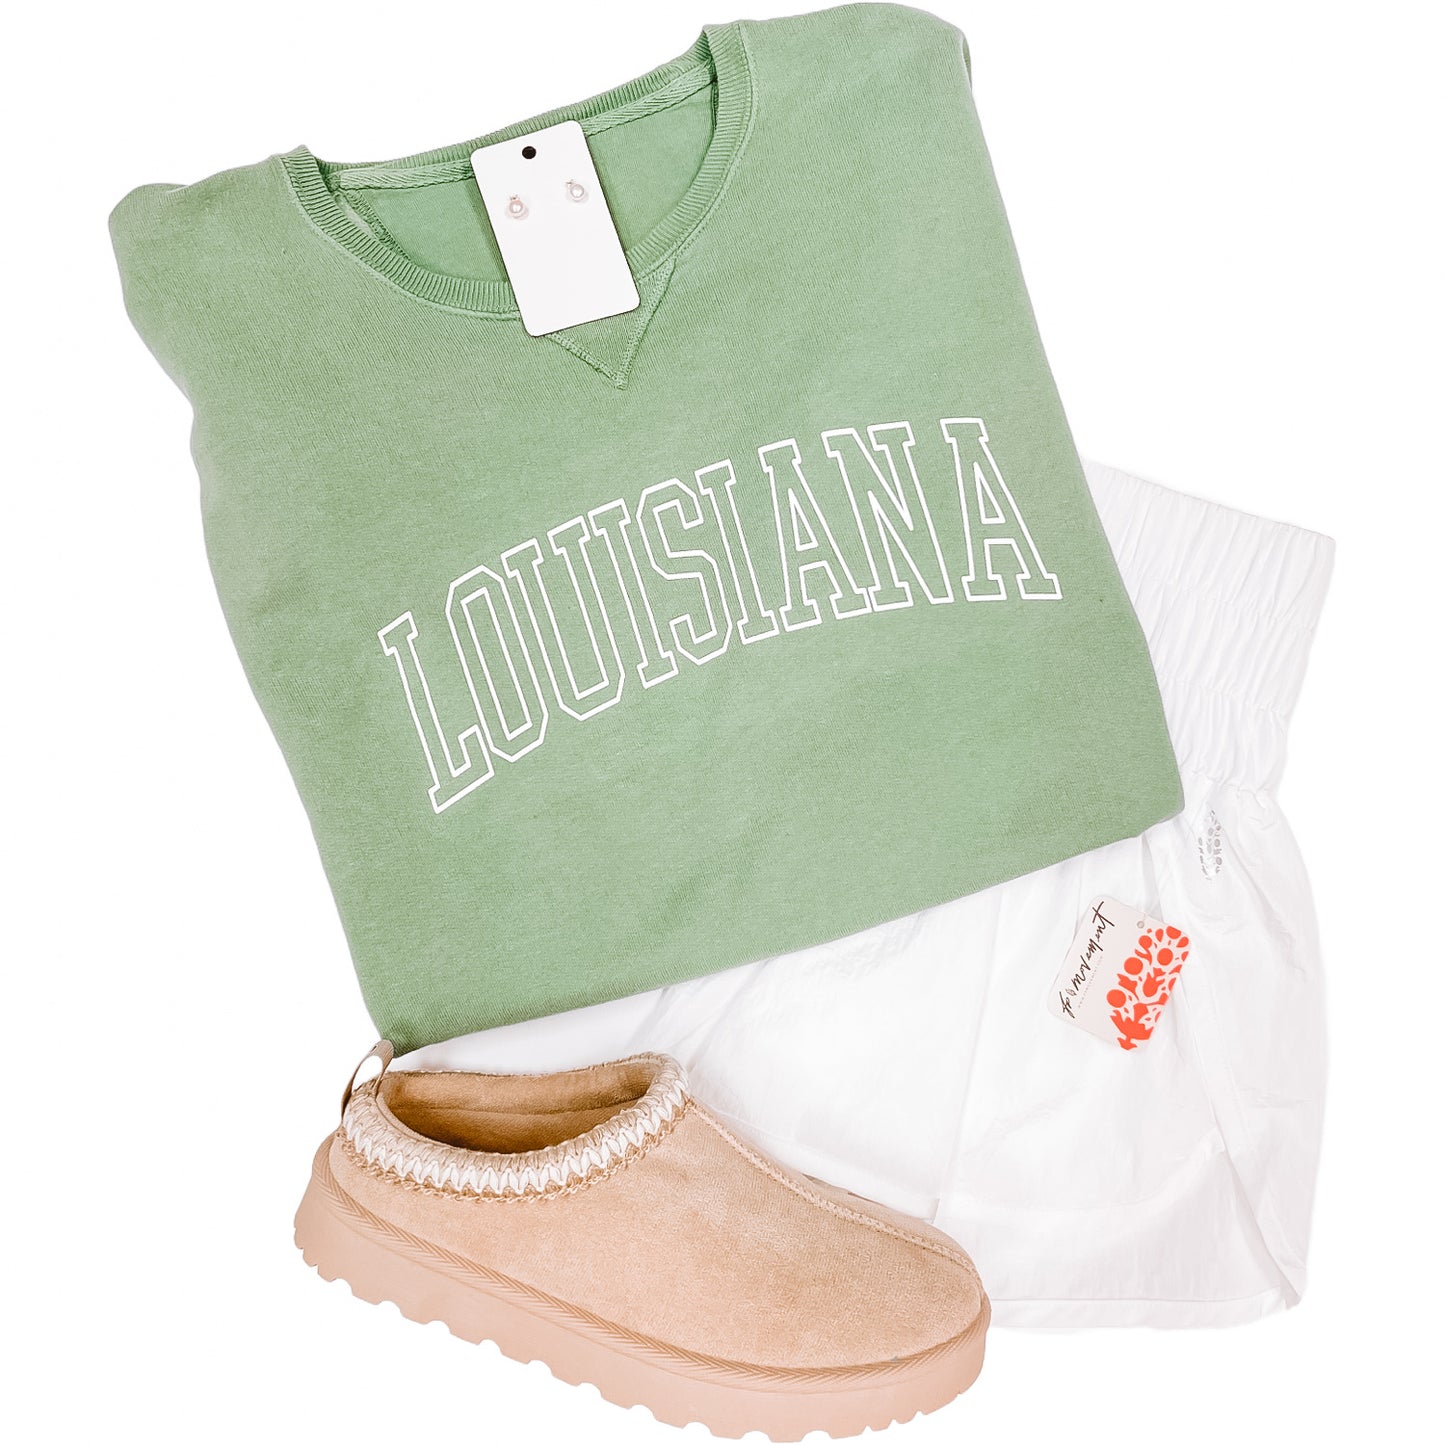 Louisiana Prep Sweatshirt